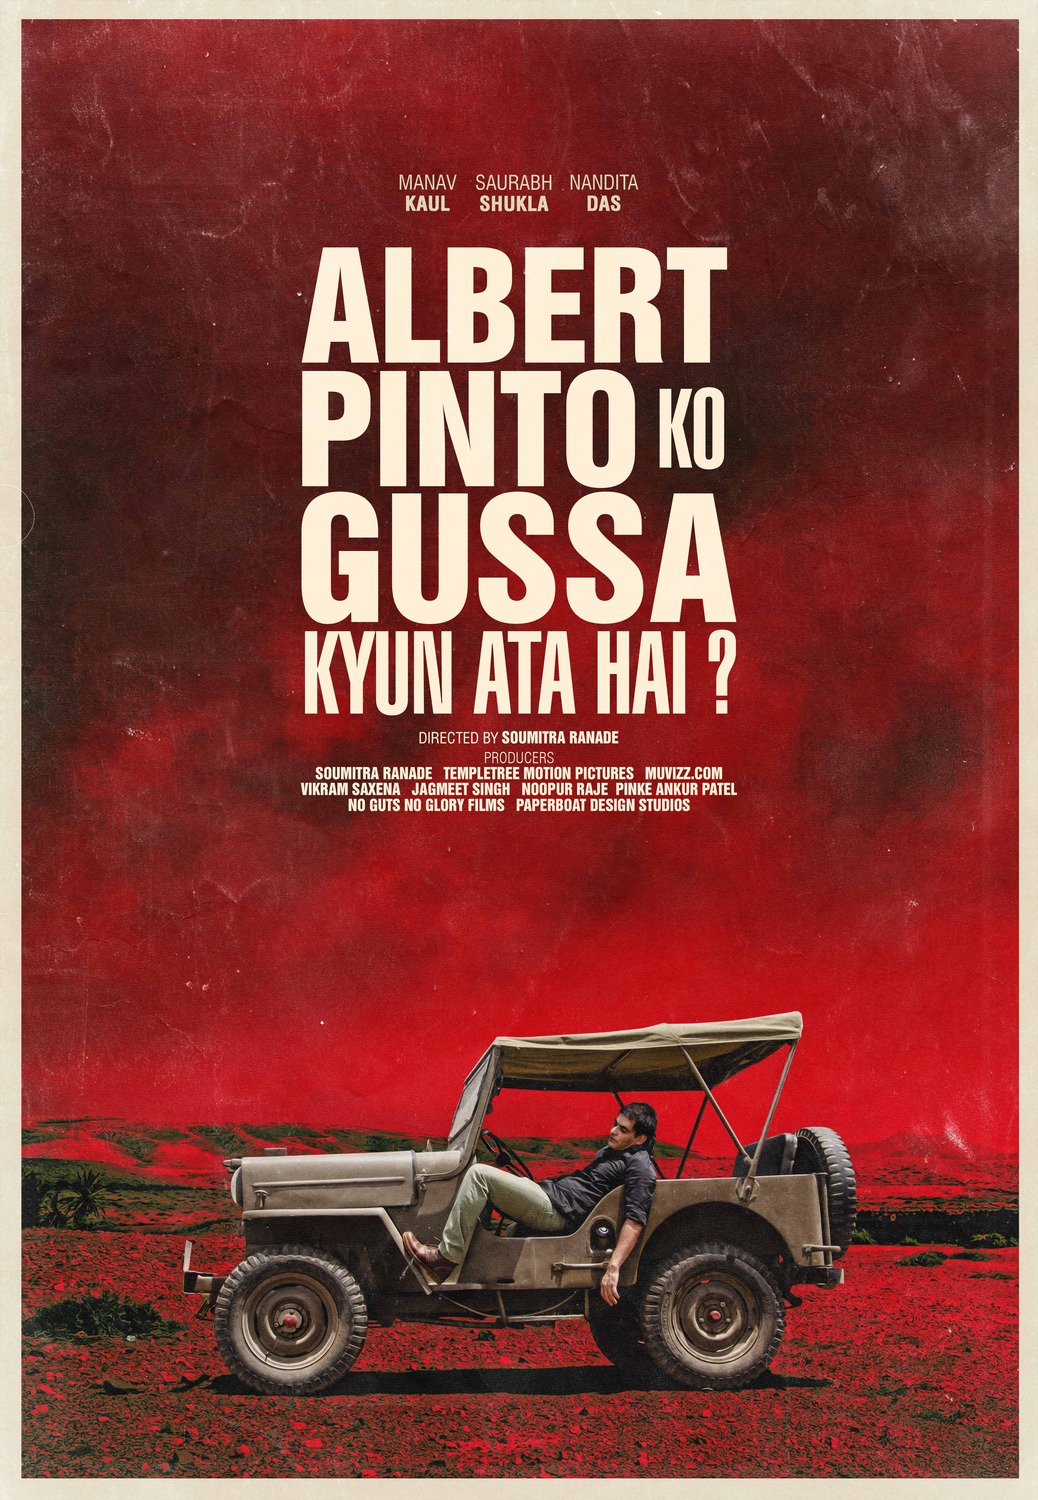 Extra Large Movie Poster Image for Albert Pinto Ko Gussa Kyun Aata Hai? (#1 of 2)